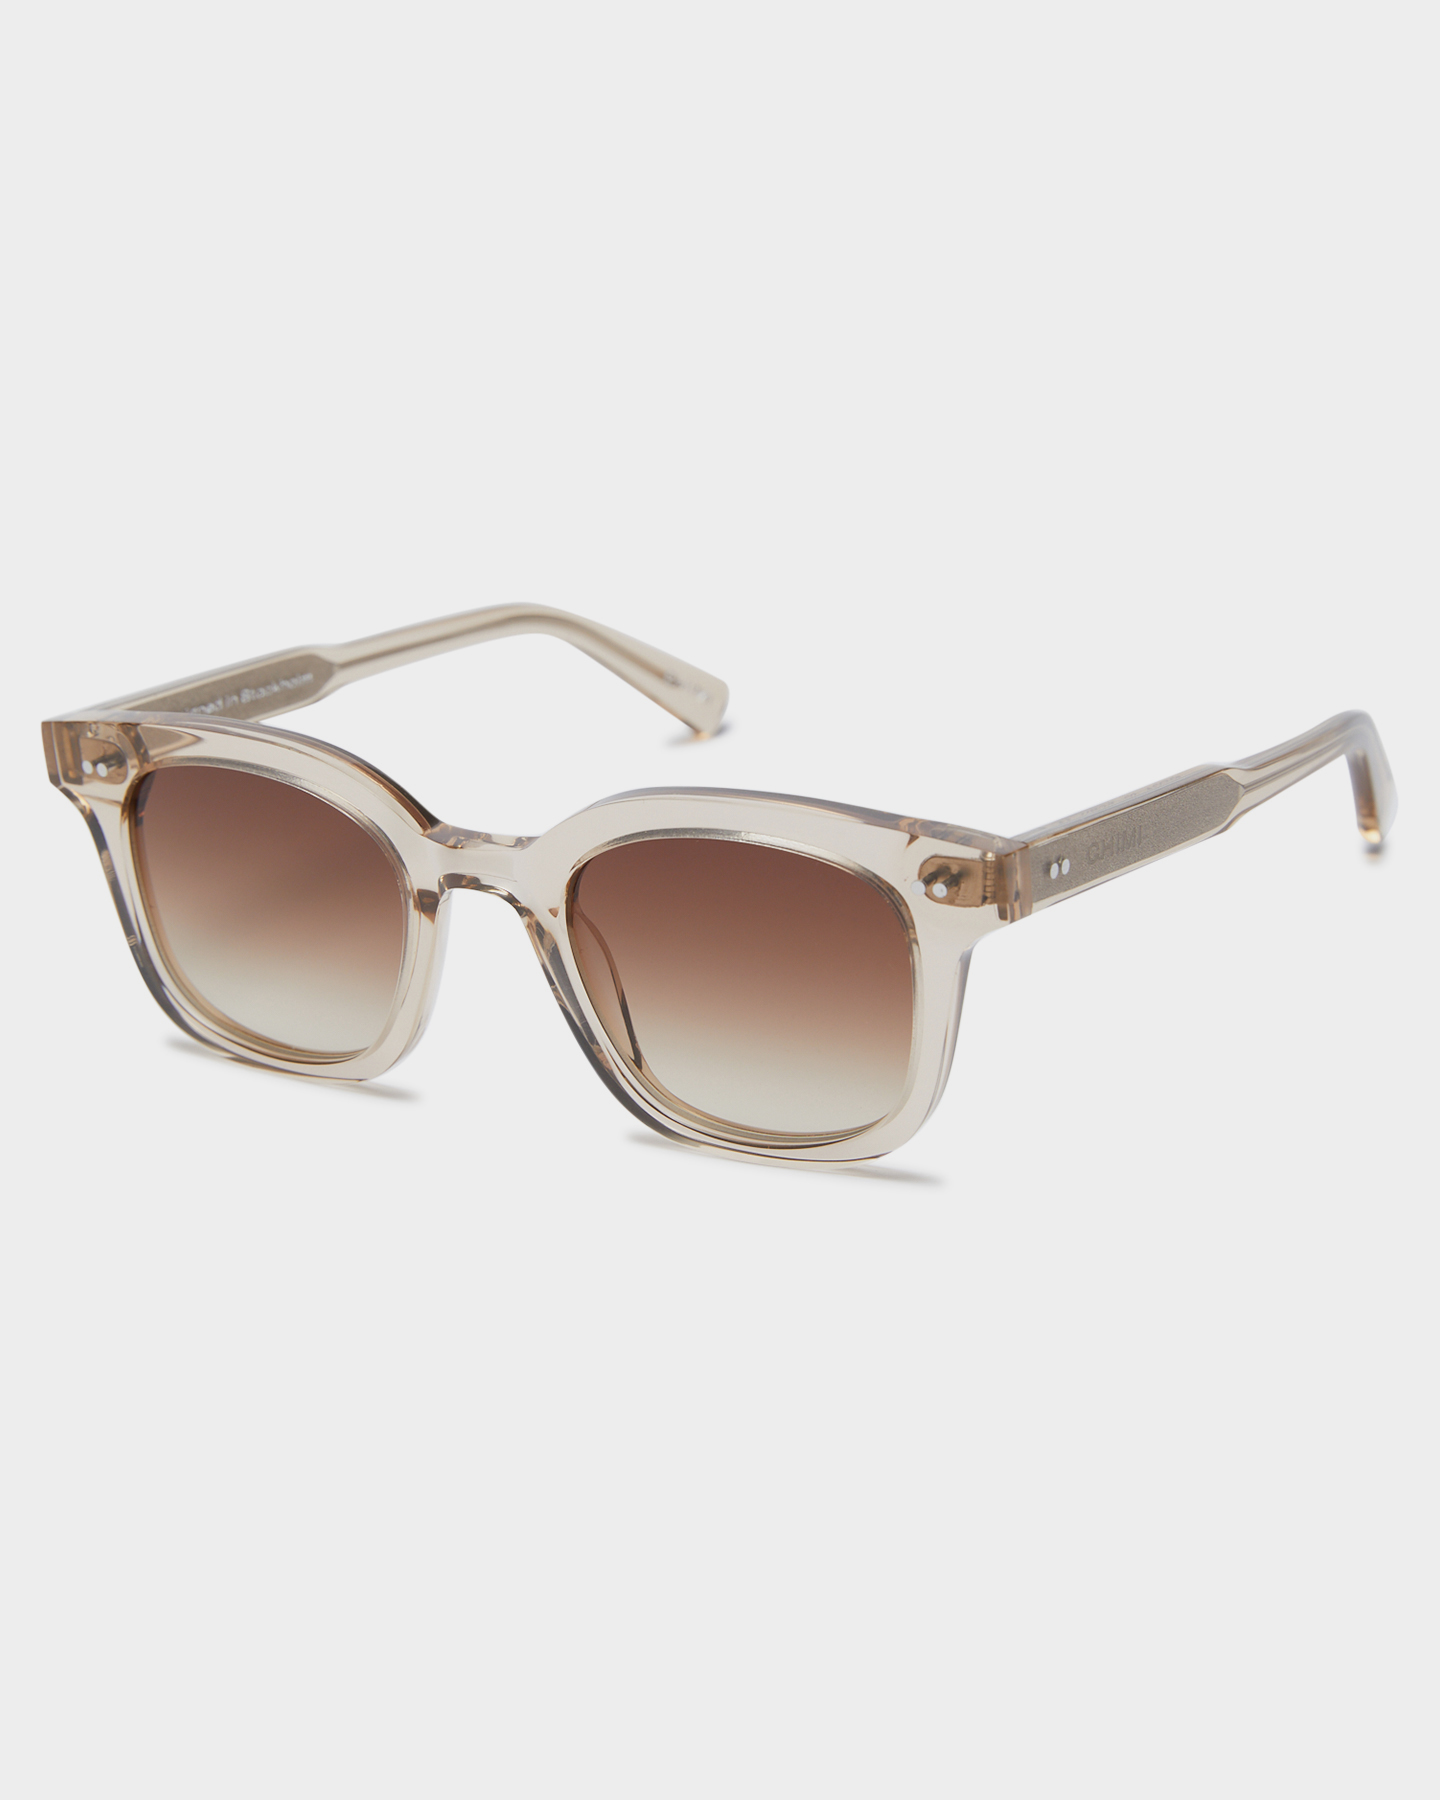 Chimi Eyewear Core 2 Sunglasses - Ecru | SurfStitch